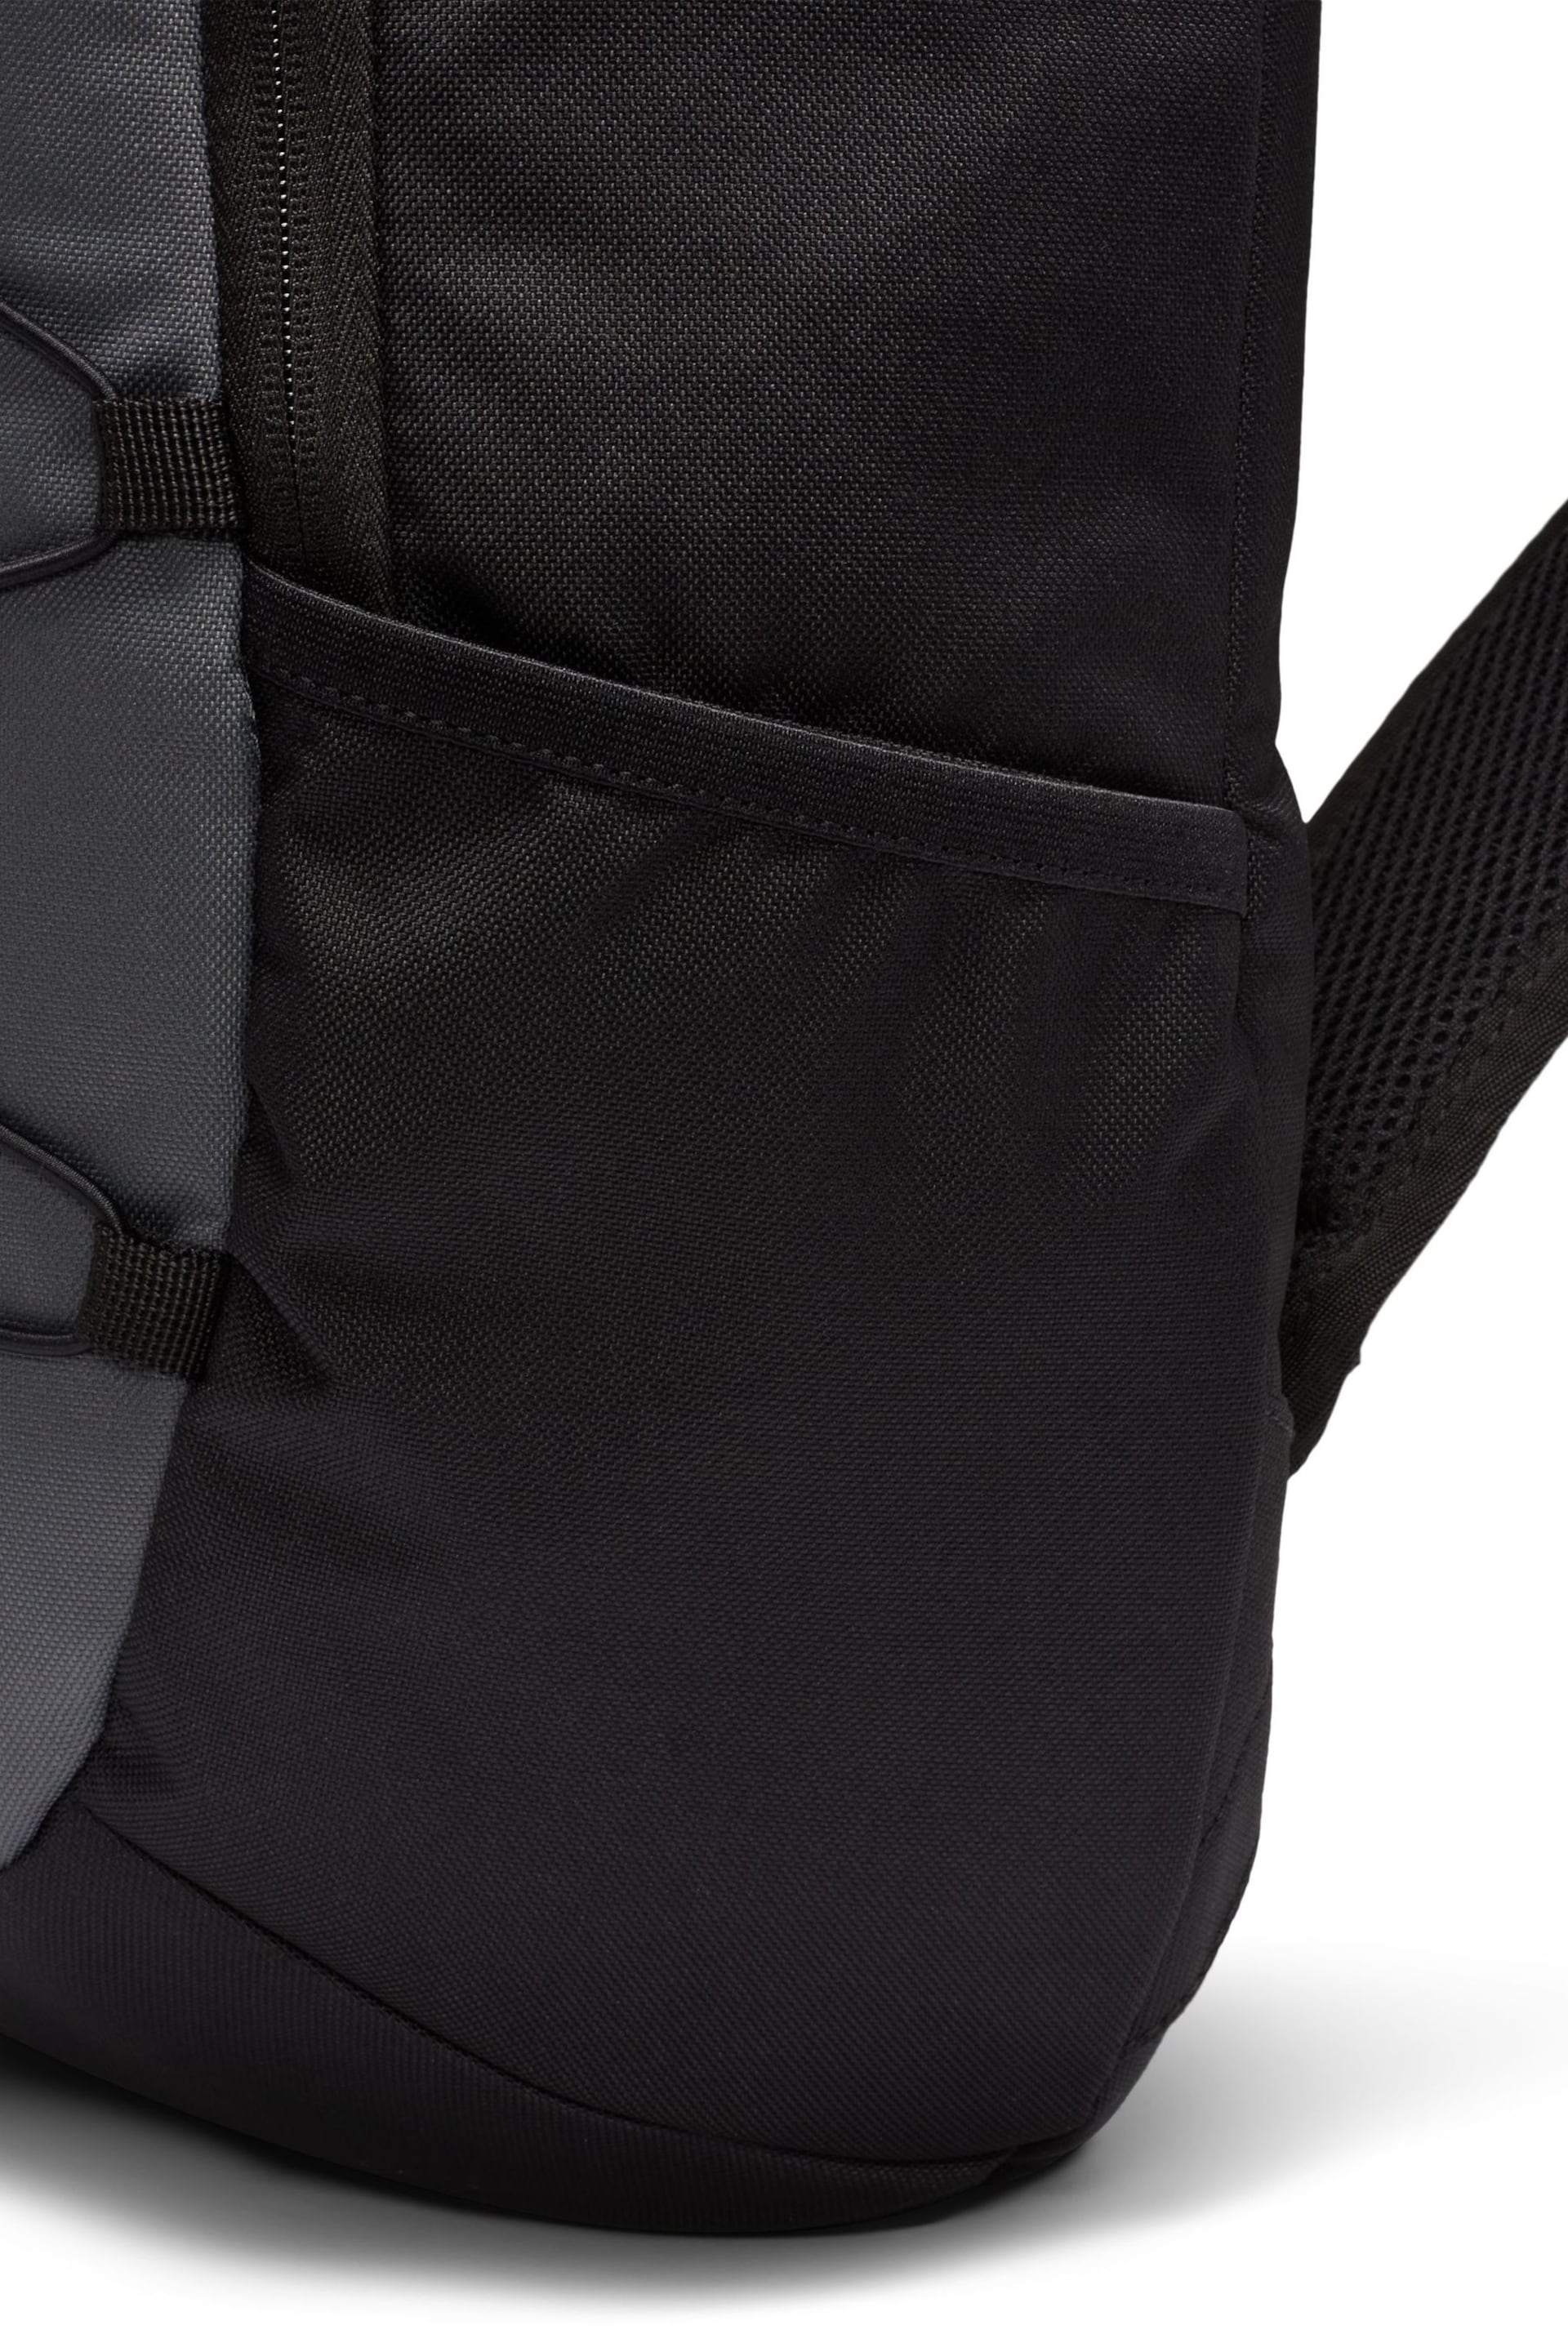 Nike Black Air GRX Backpack - Image 8 of 9